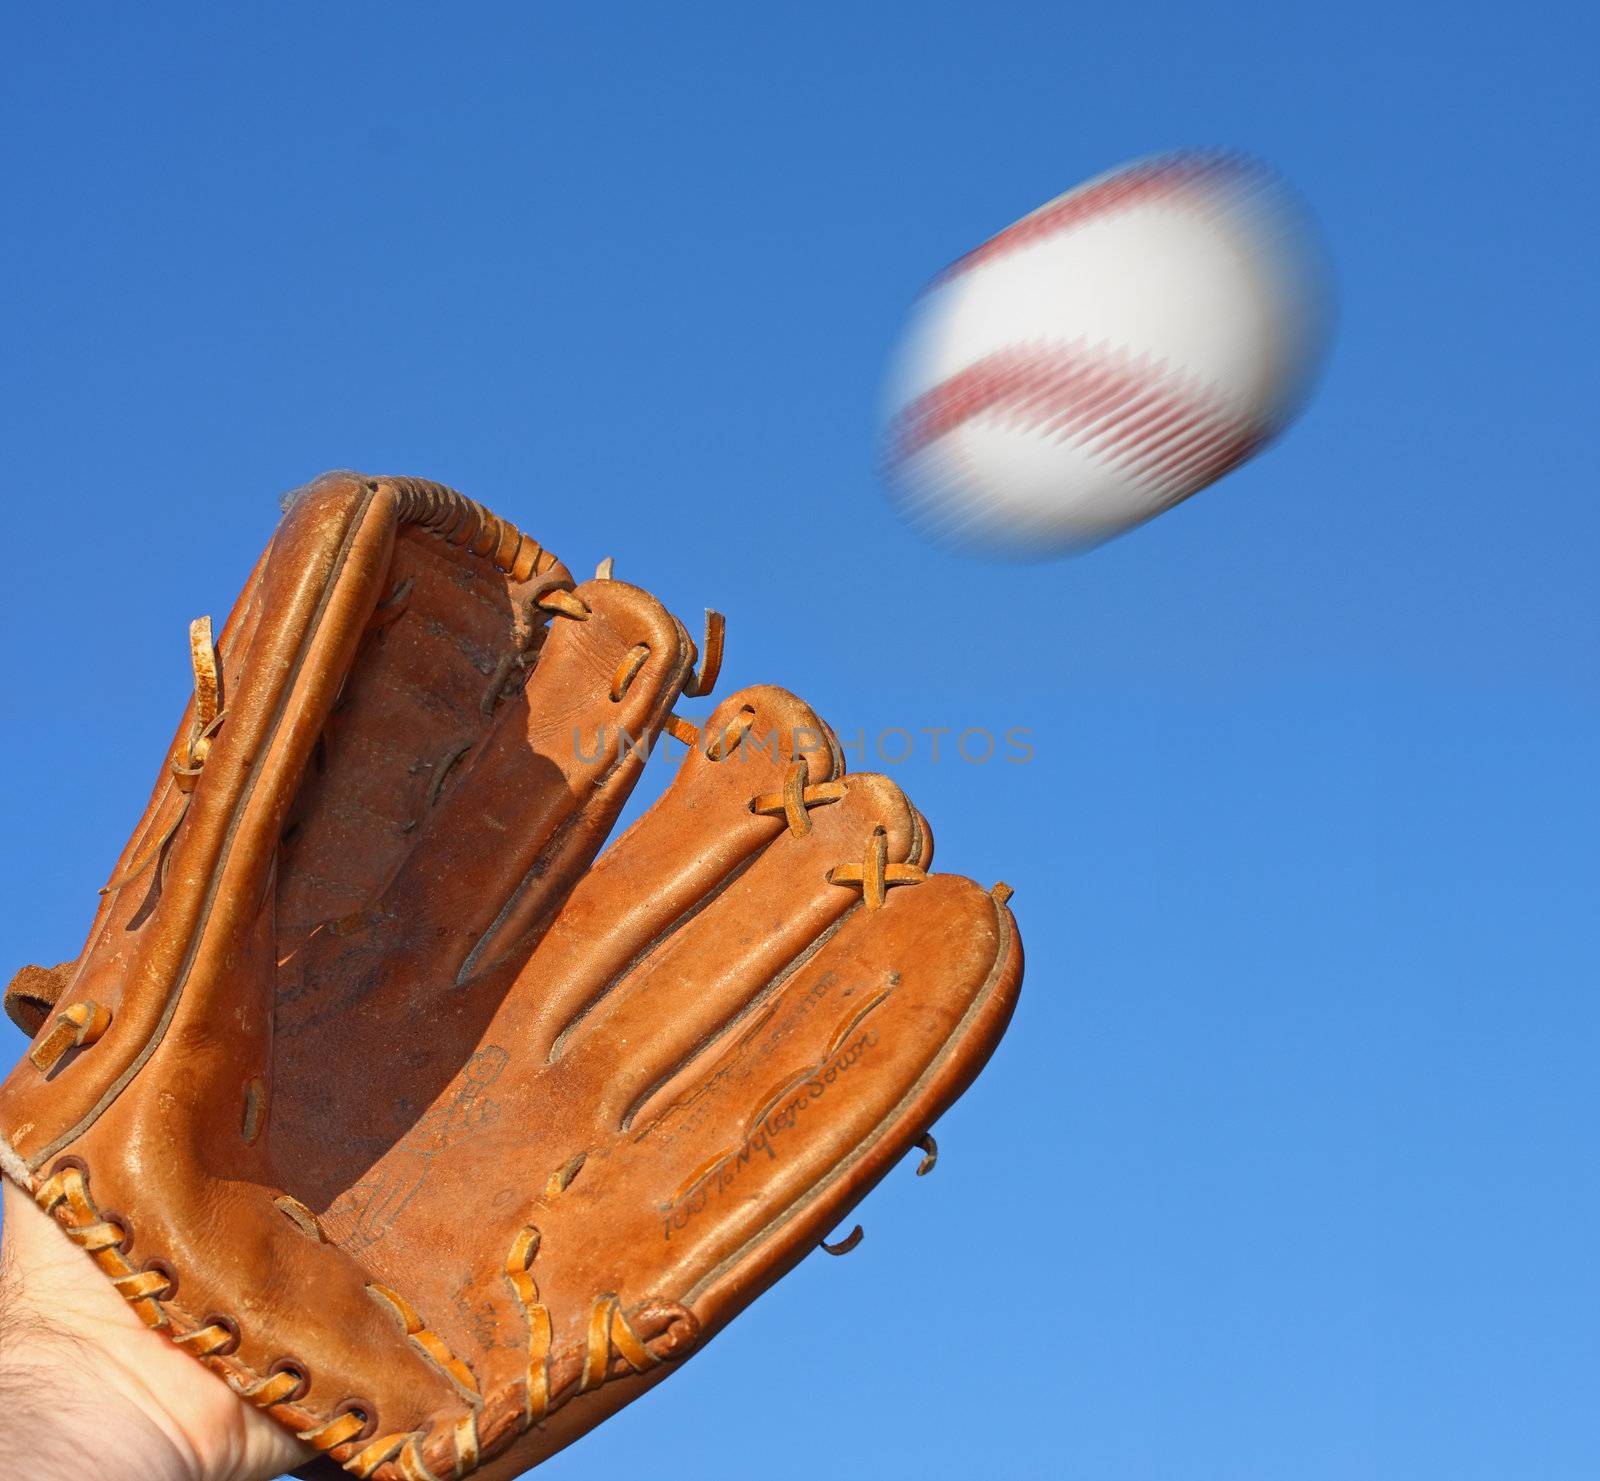 Baseball and glove by Geoarts